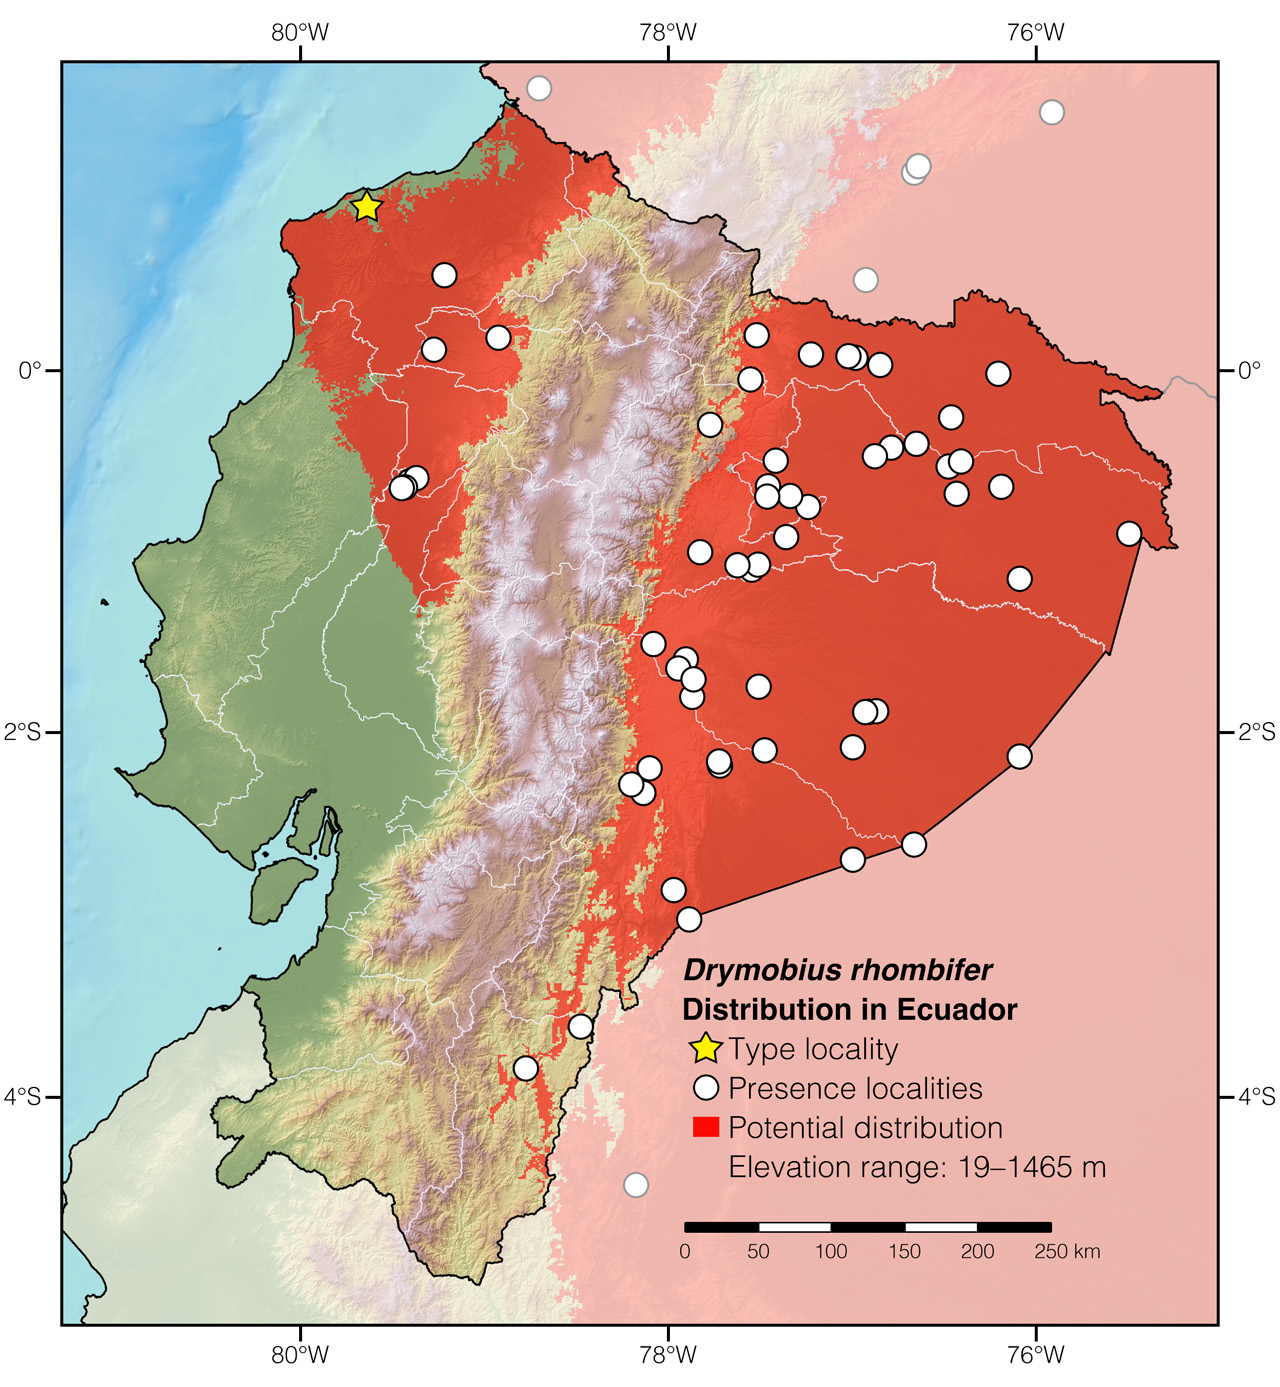 Distribution of Drymobius rhombifer in Ecuador